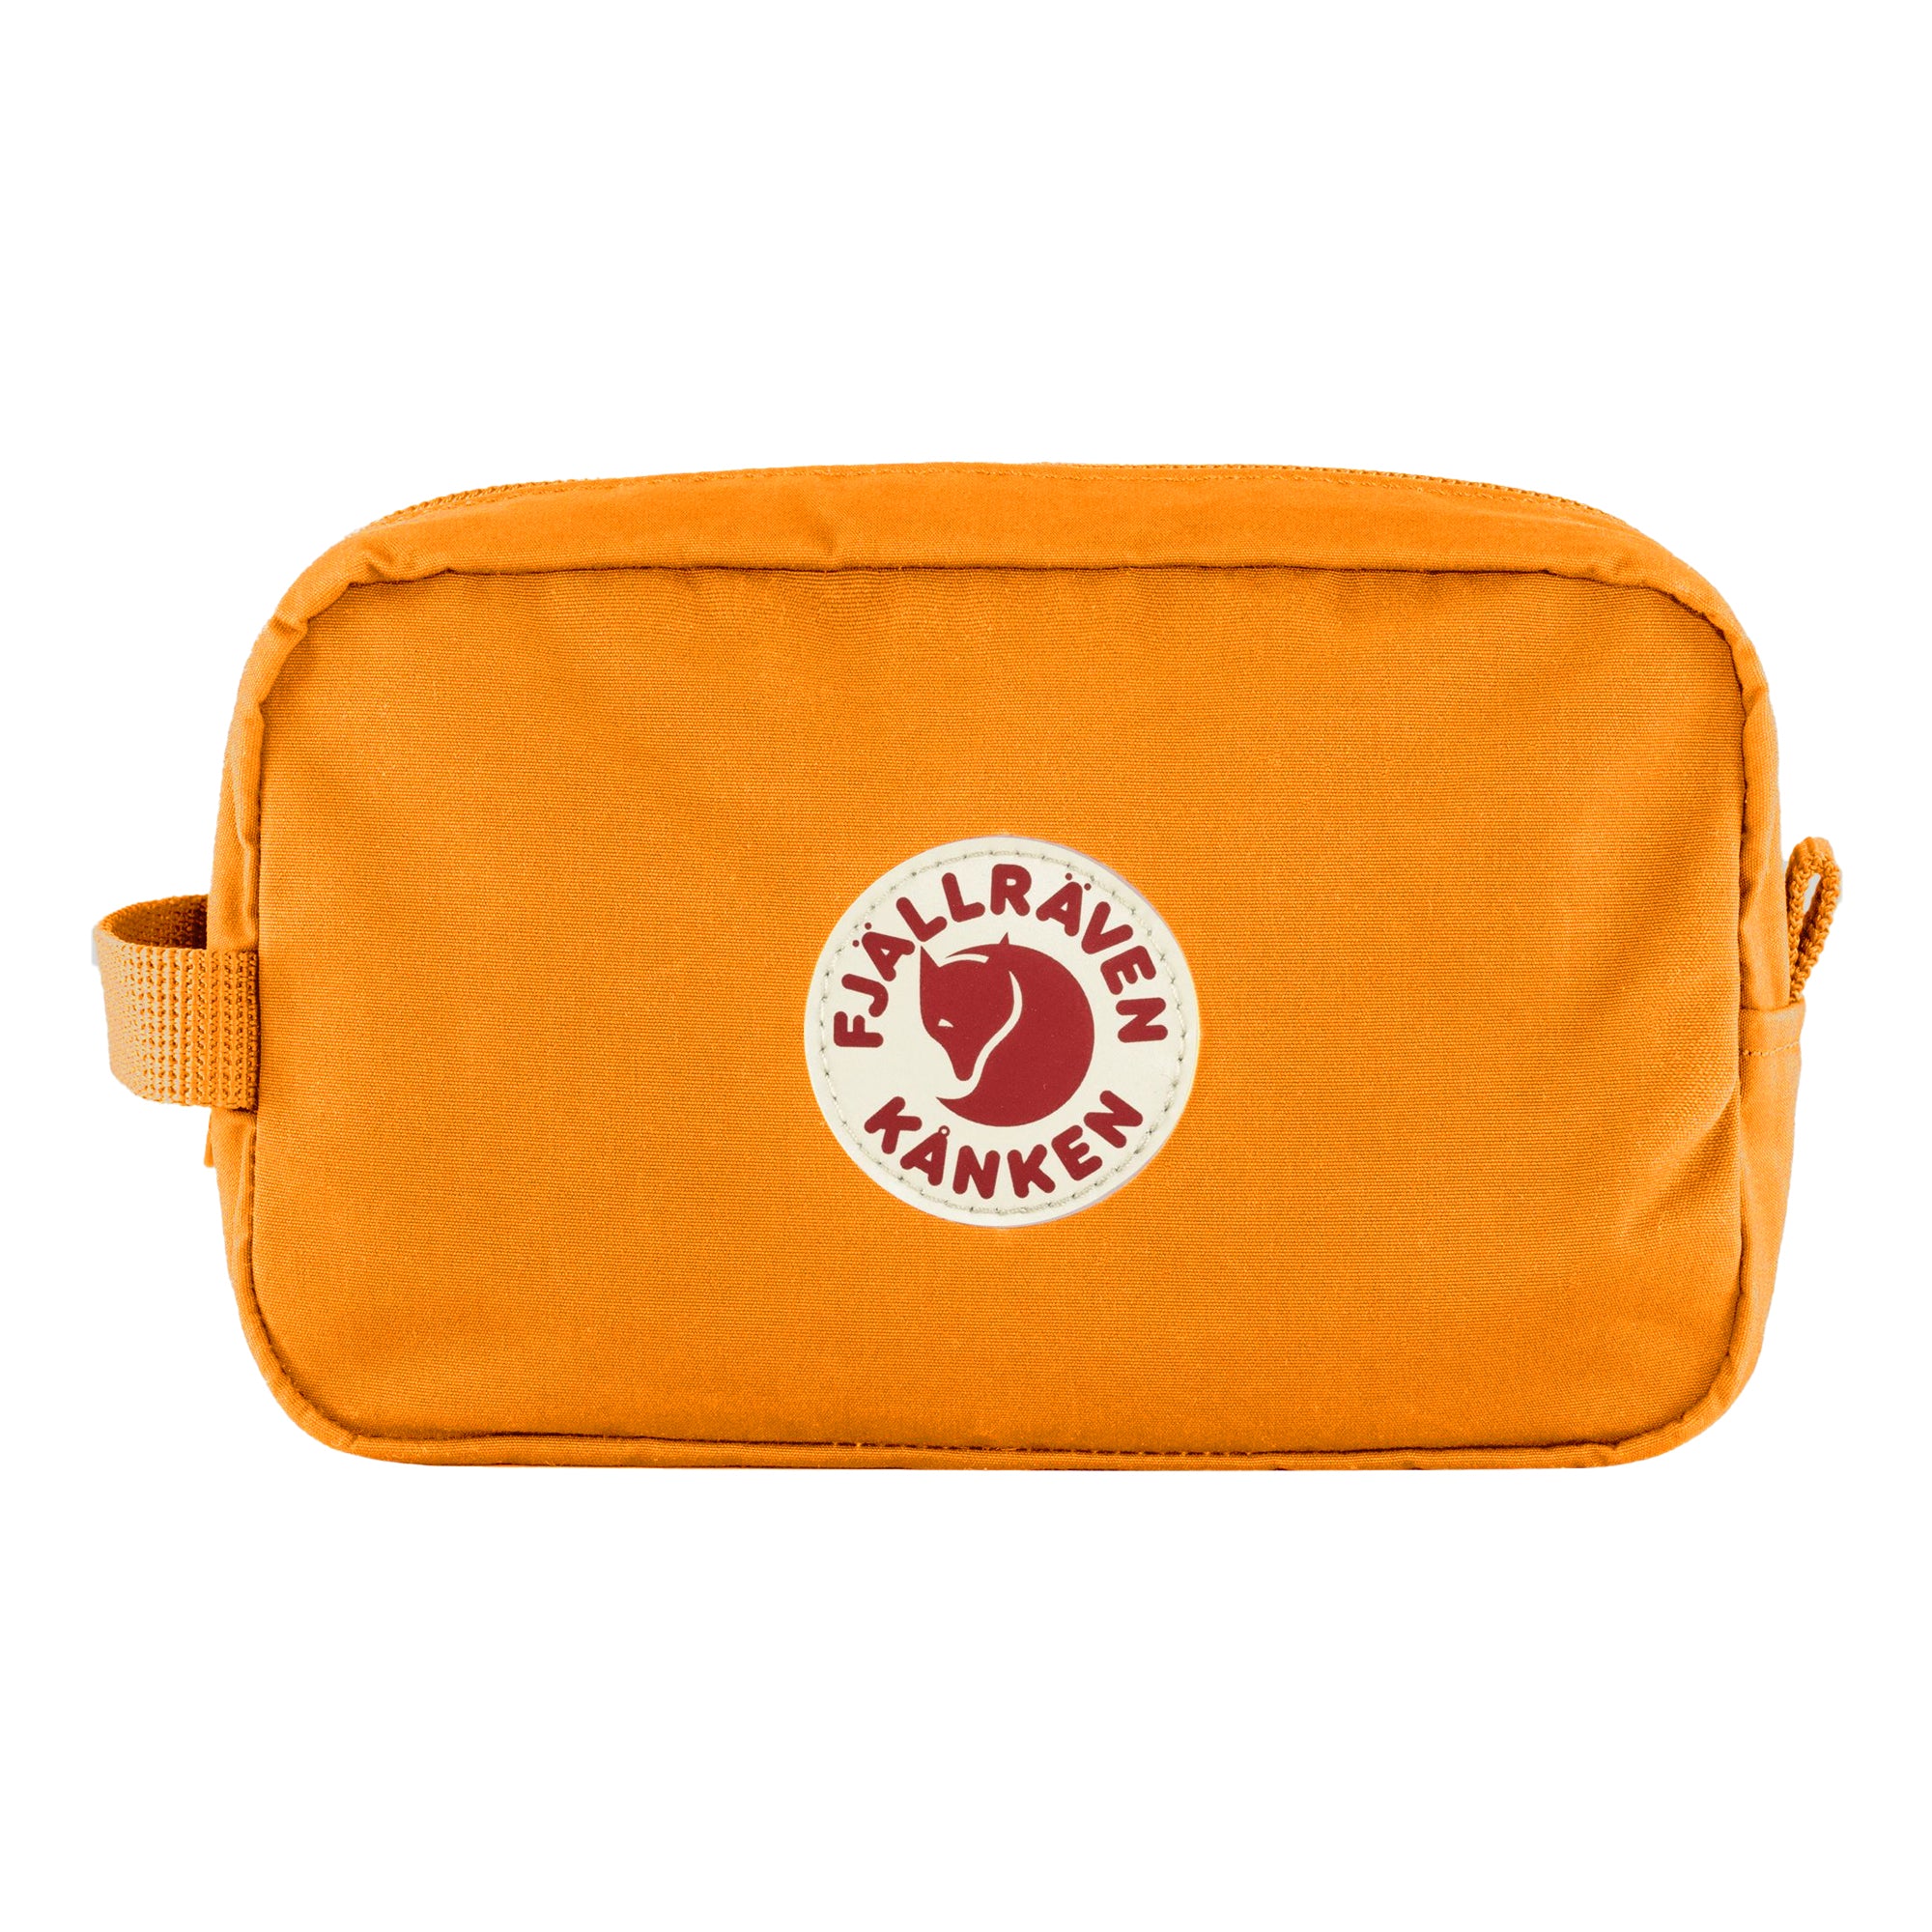 Fjallraven Kanken Gear Bag - Spicy Orange